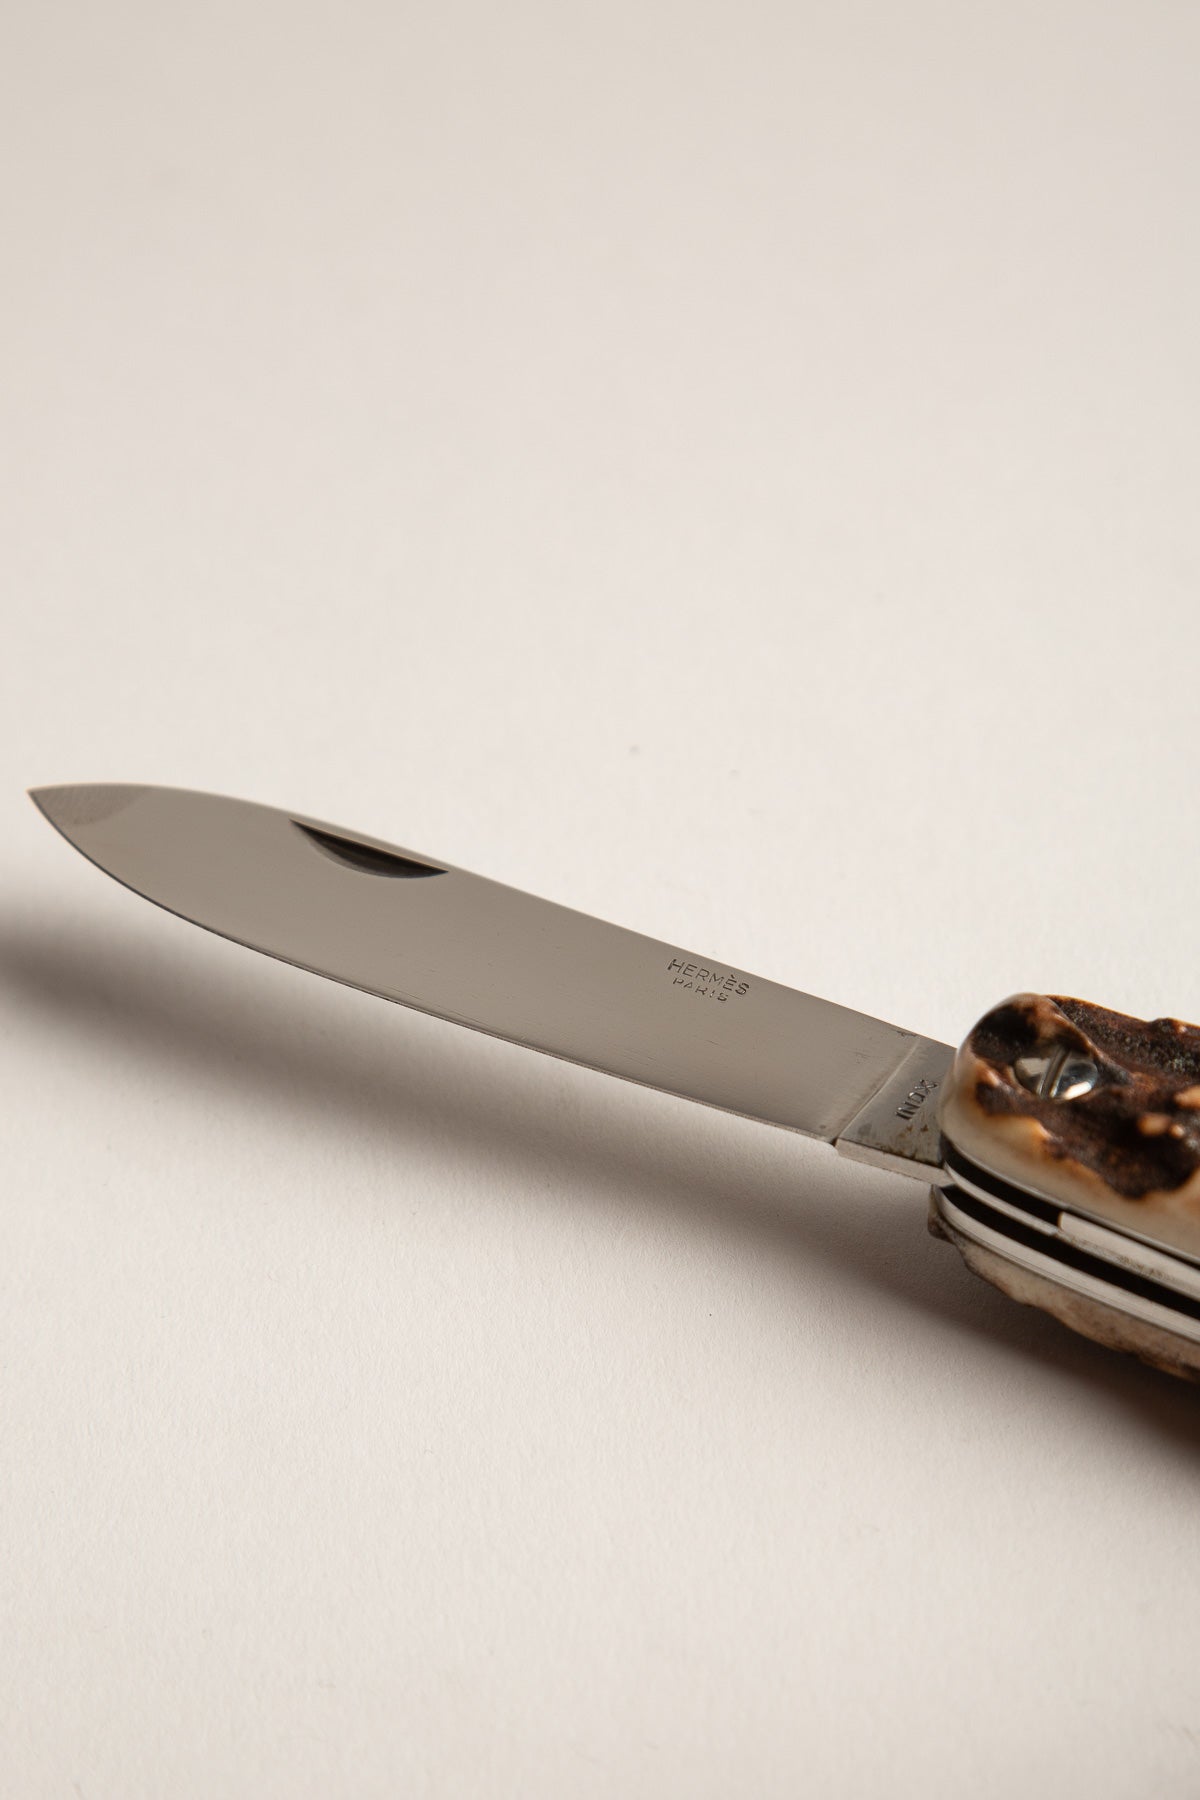 HERMÈS | VINTAGE ROUGH BONE MULTI BLADE KNIFE